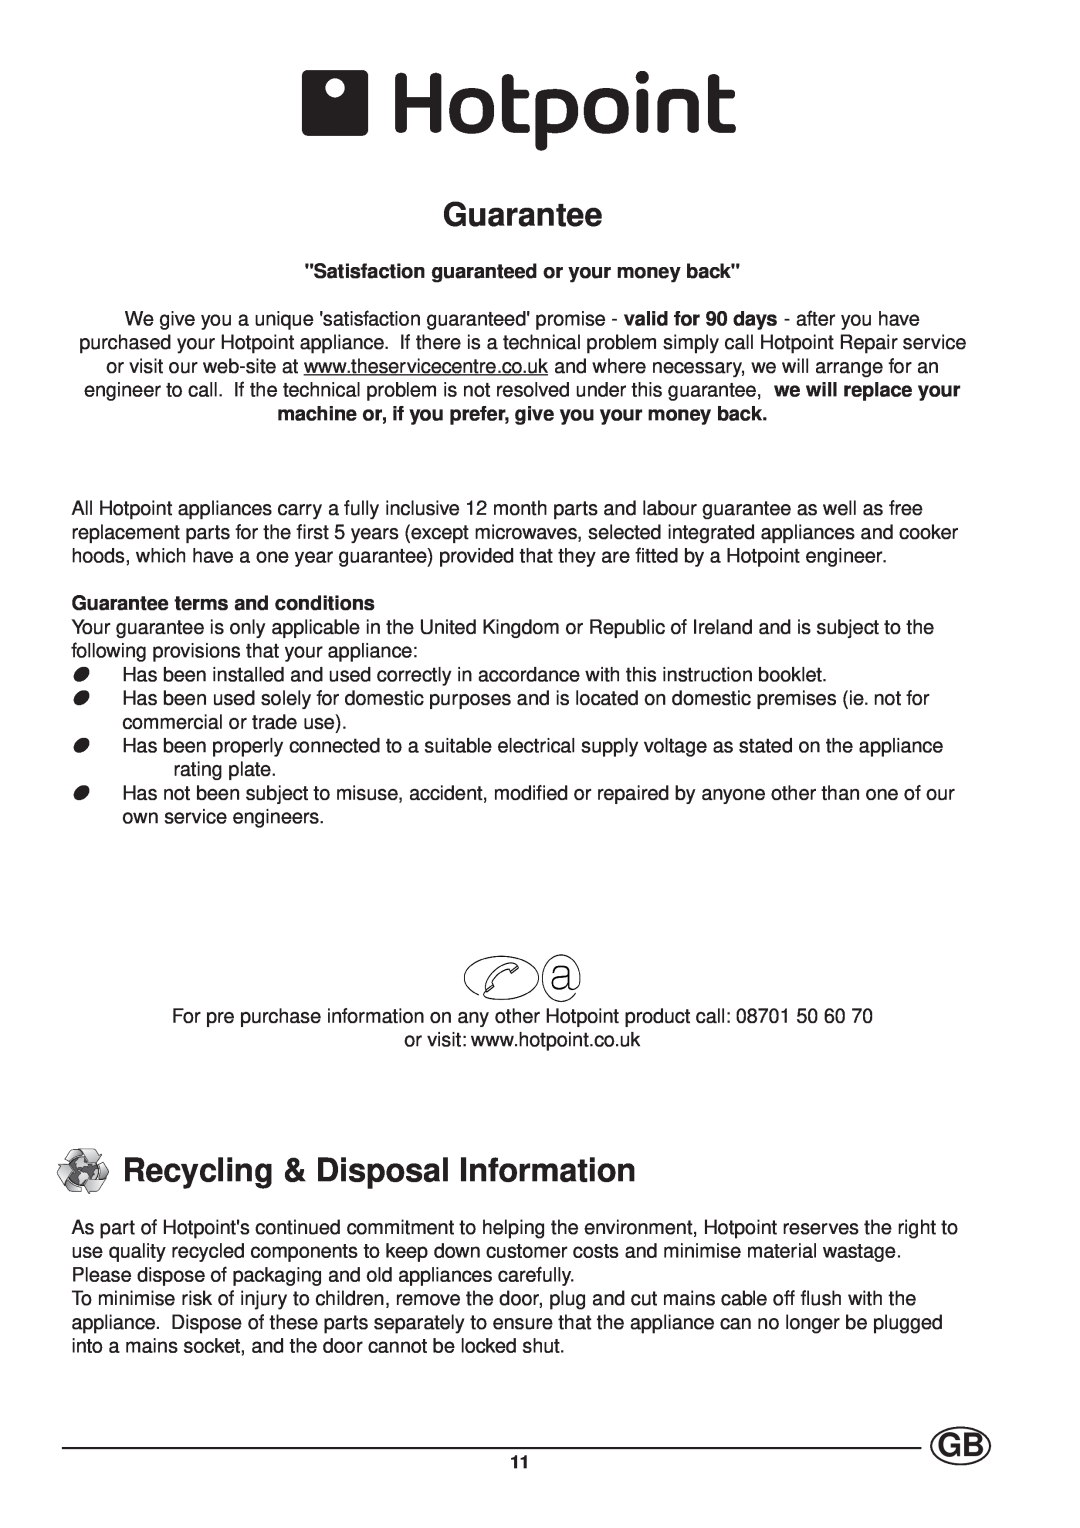 Hotpoint EC6005 manual Guarantee, Recycling & Disposal Information, Satisfaction guaranteed or your money back 